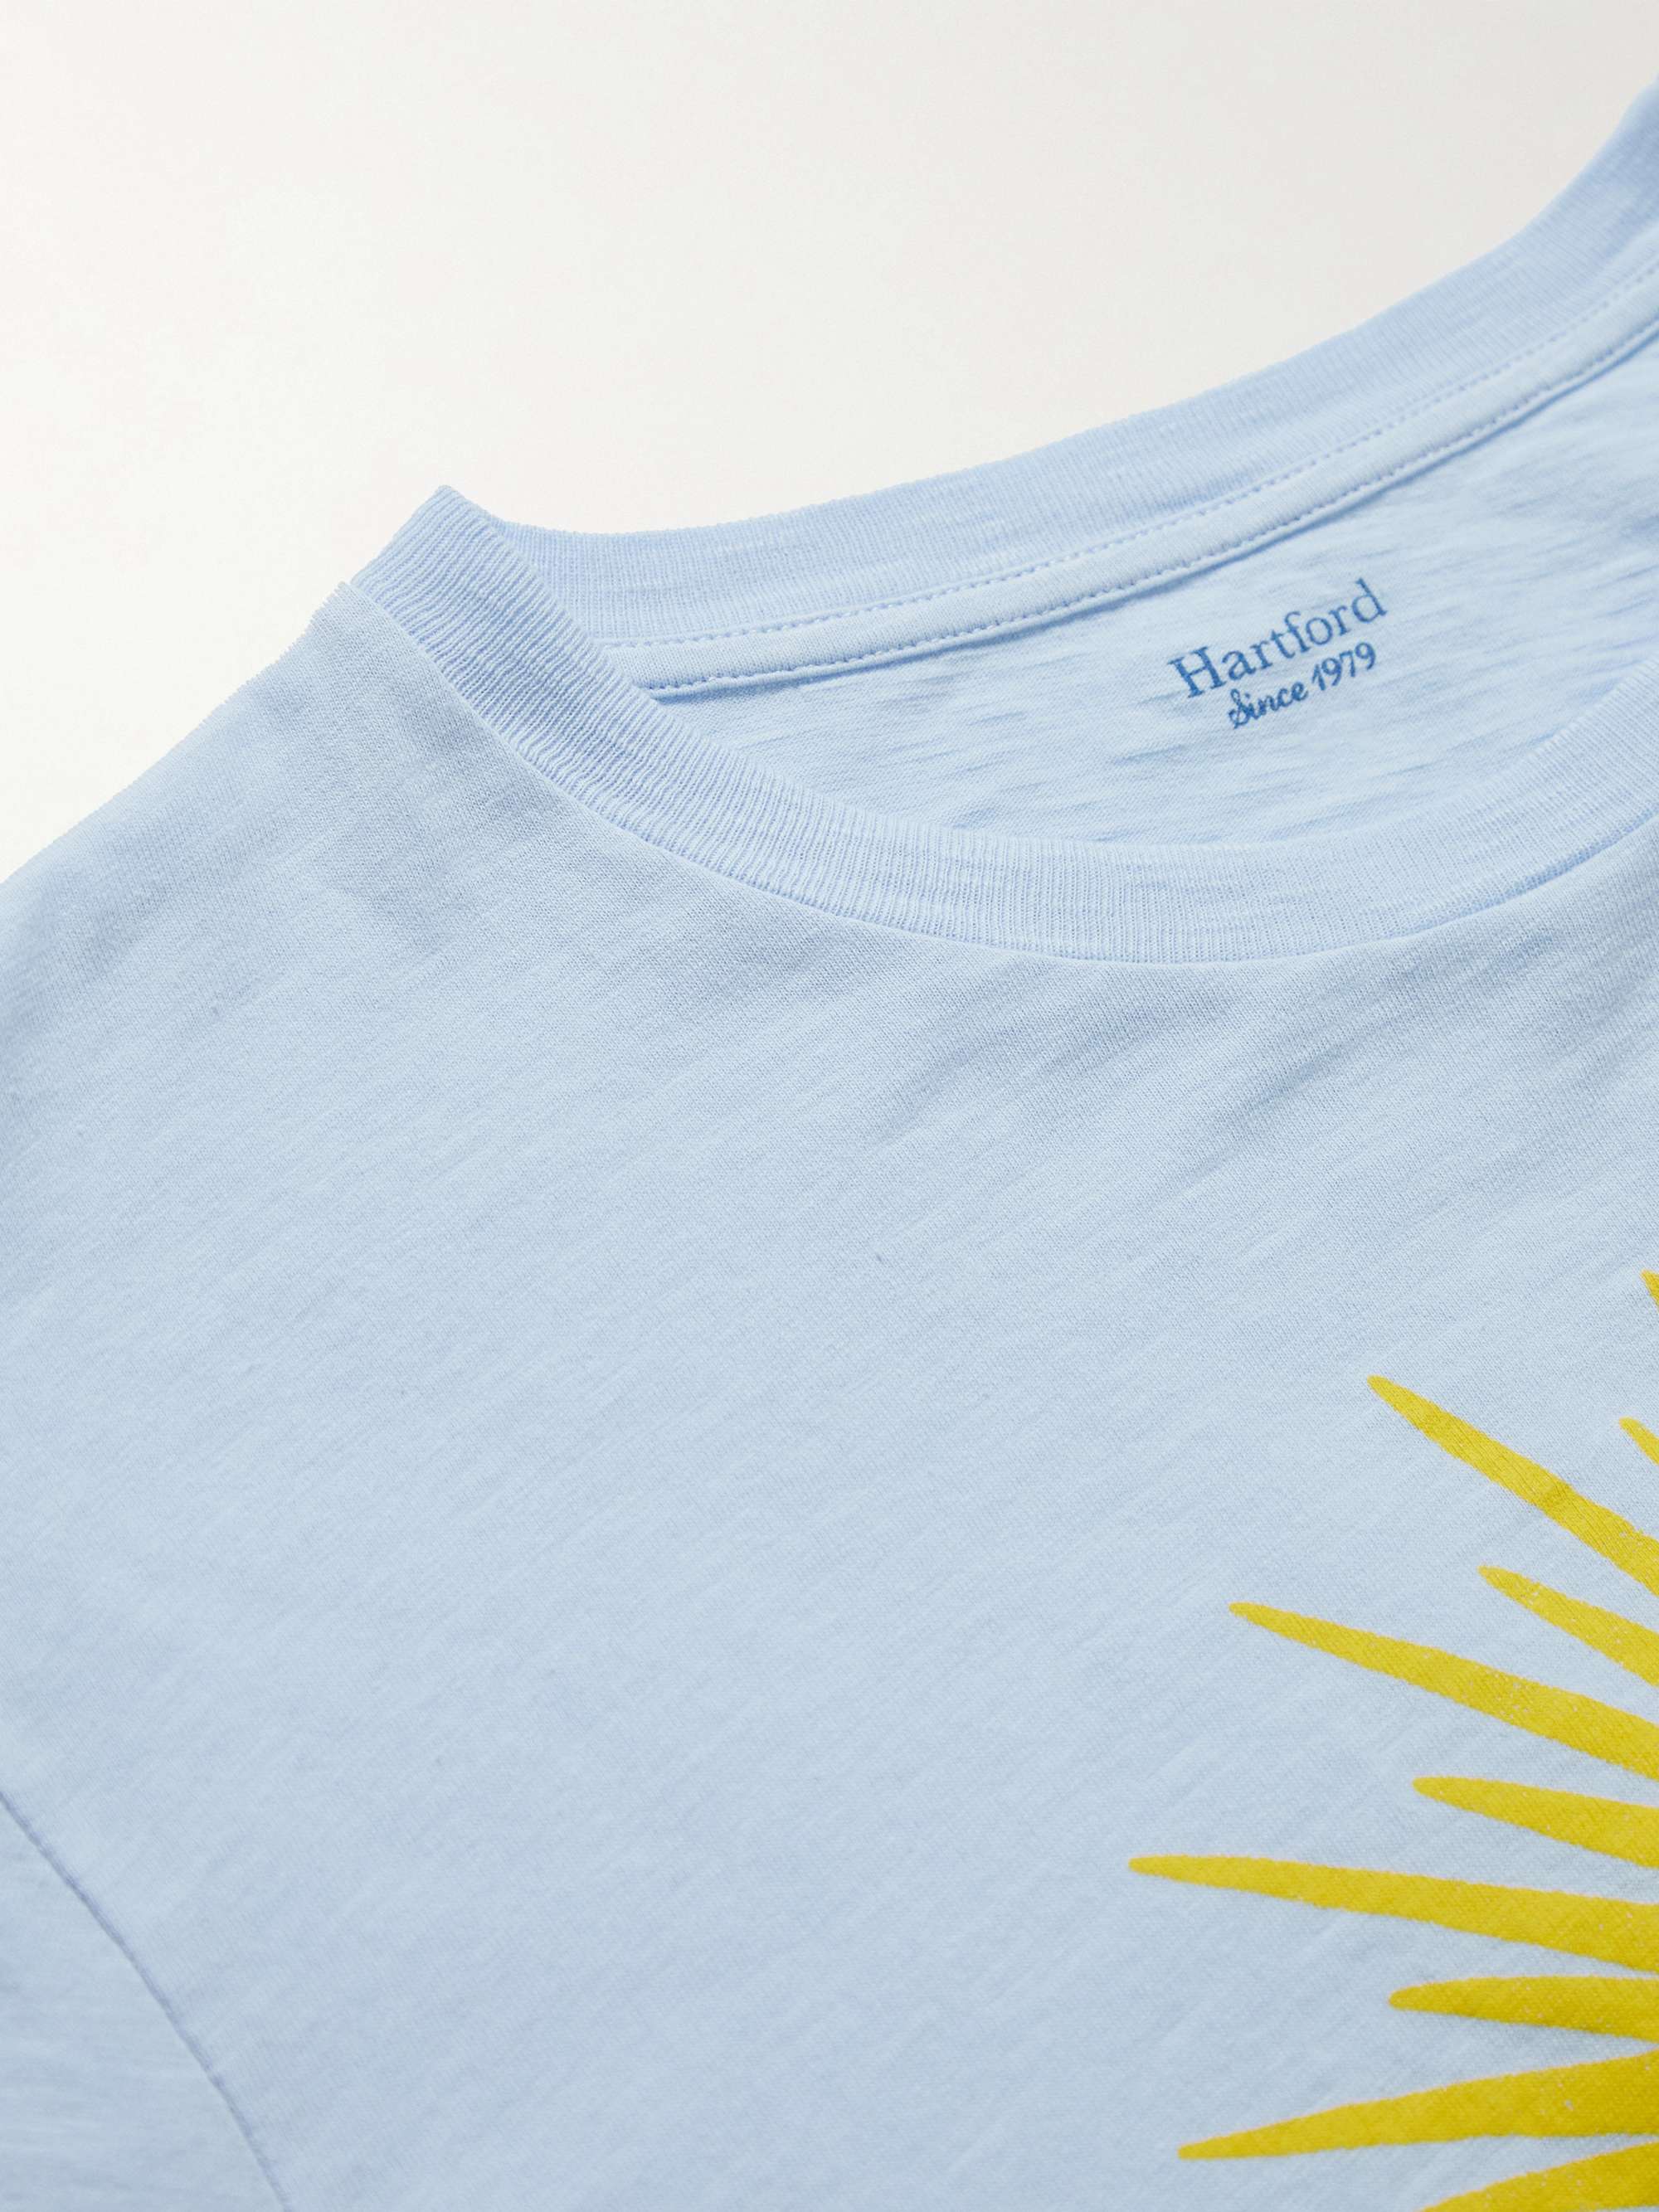 HARTFORD Sunset Printed Cotton-Jersey T-Shirt